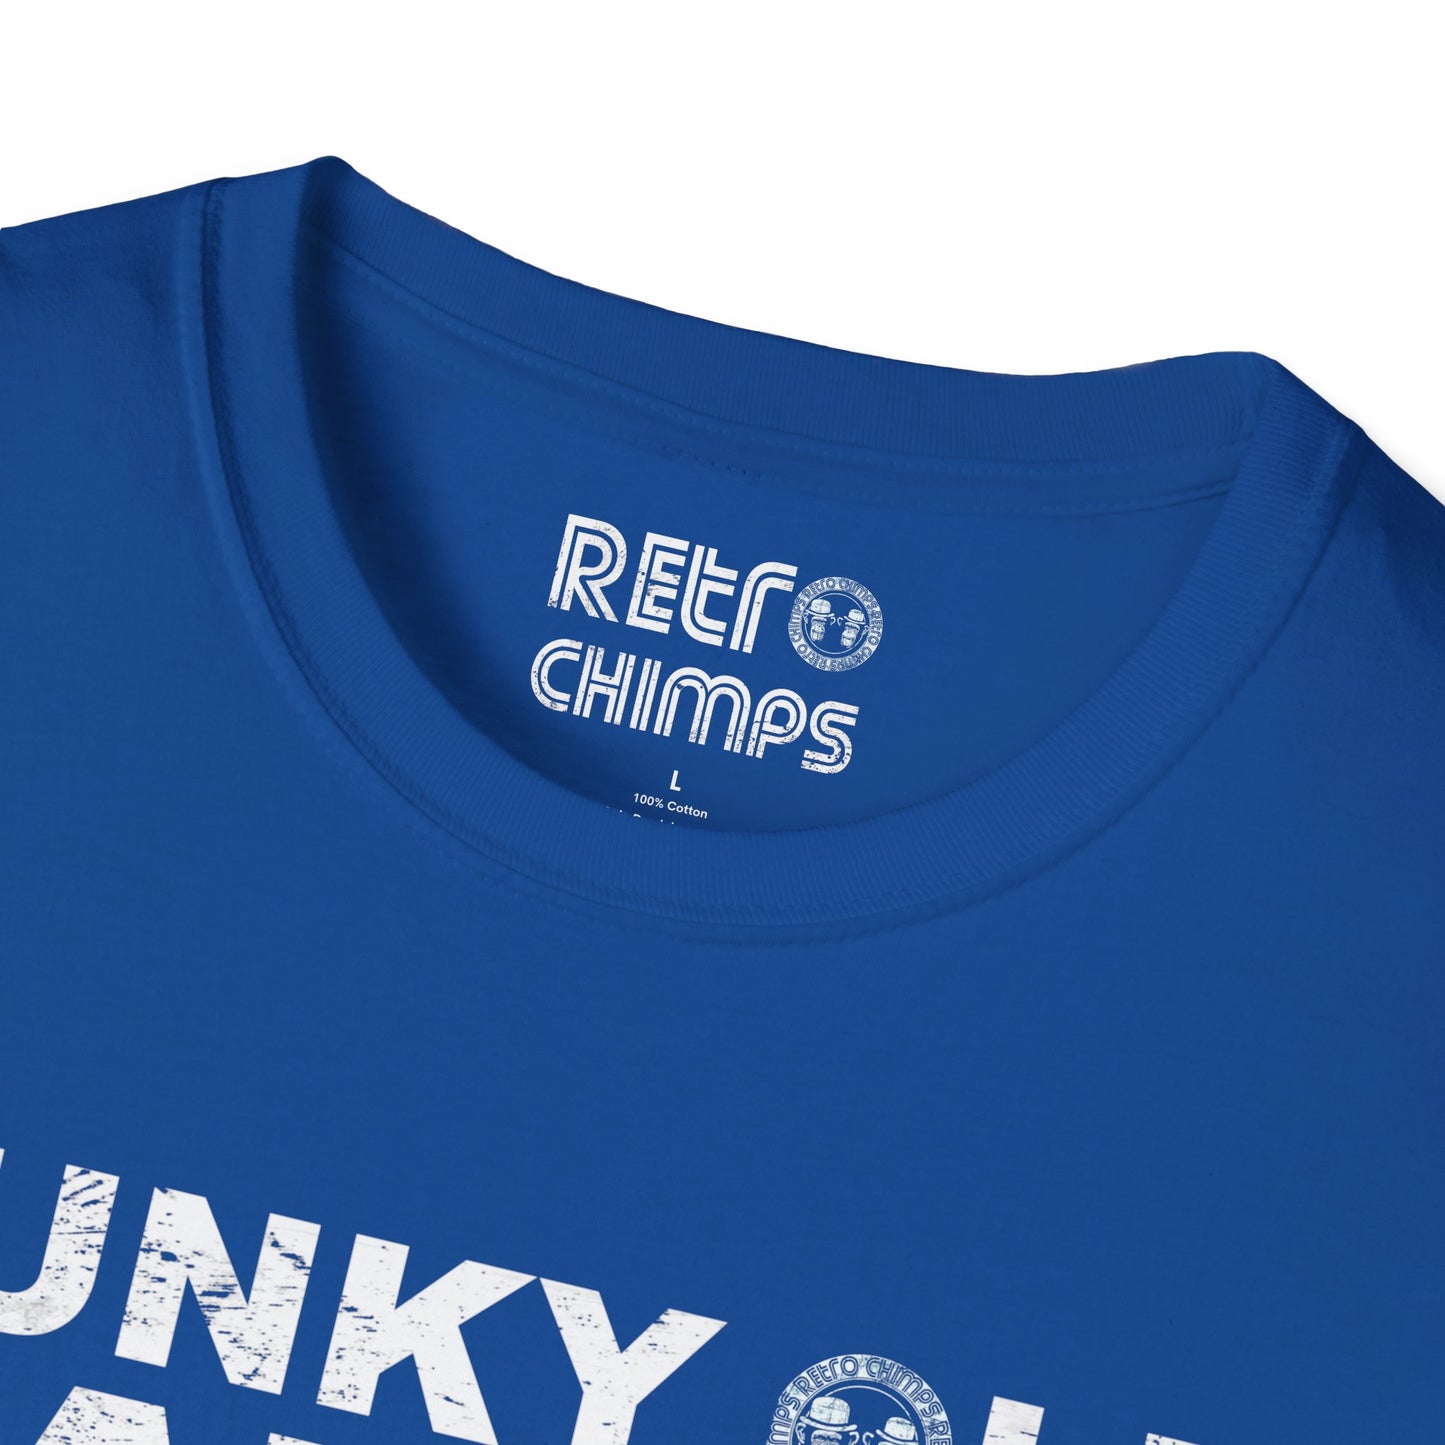 Retro Chimps Funky Old Patina Logo T-Shirt